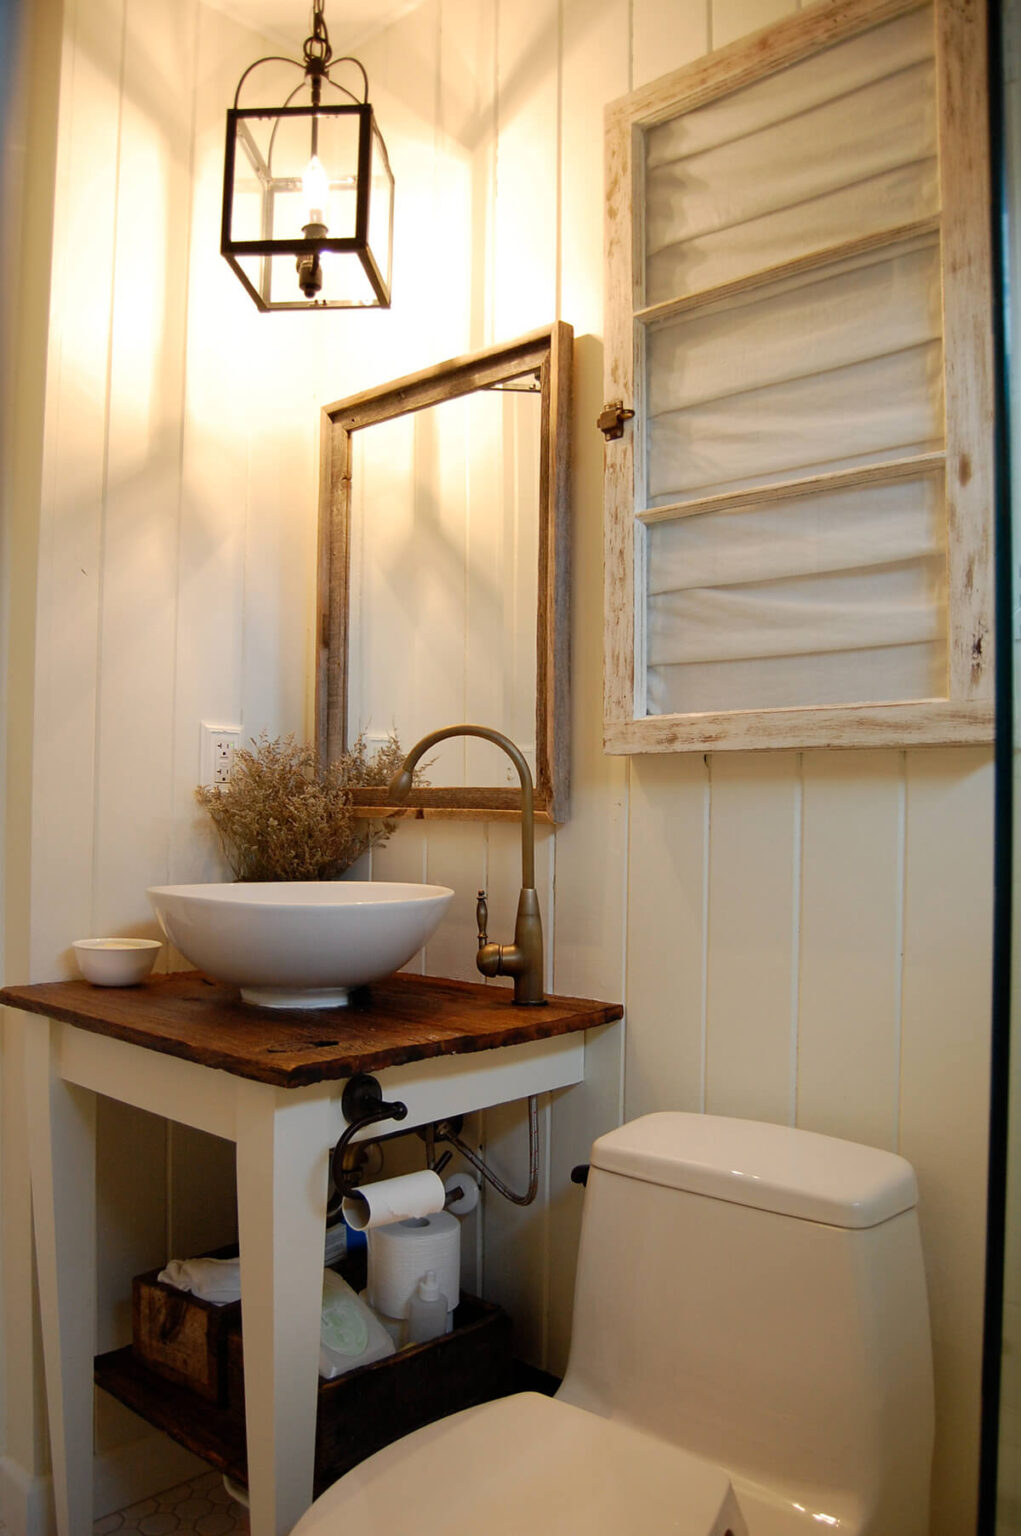 17 Rustic Bathroom Vanity Ideas Homebnc 1021x1536 